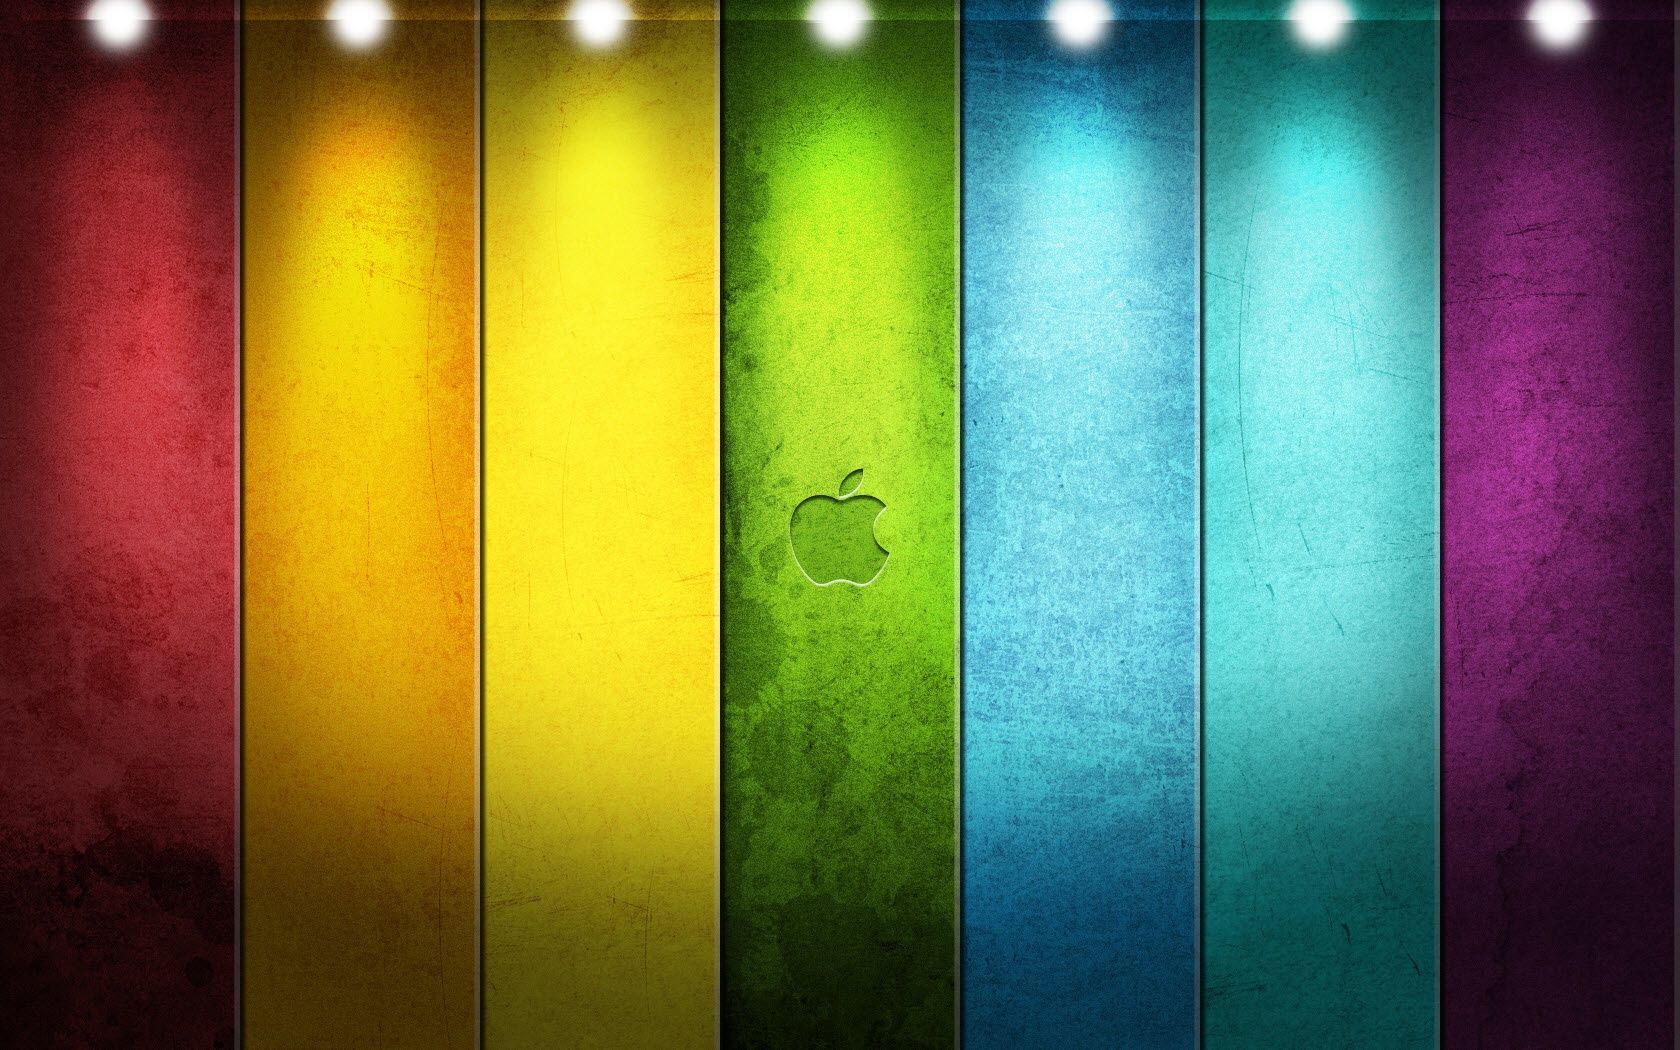 Apple HD Wallpapers Apple Logo Desktop Backgrounds